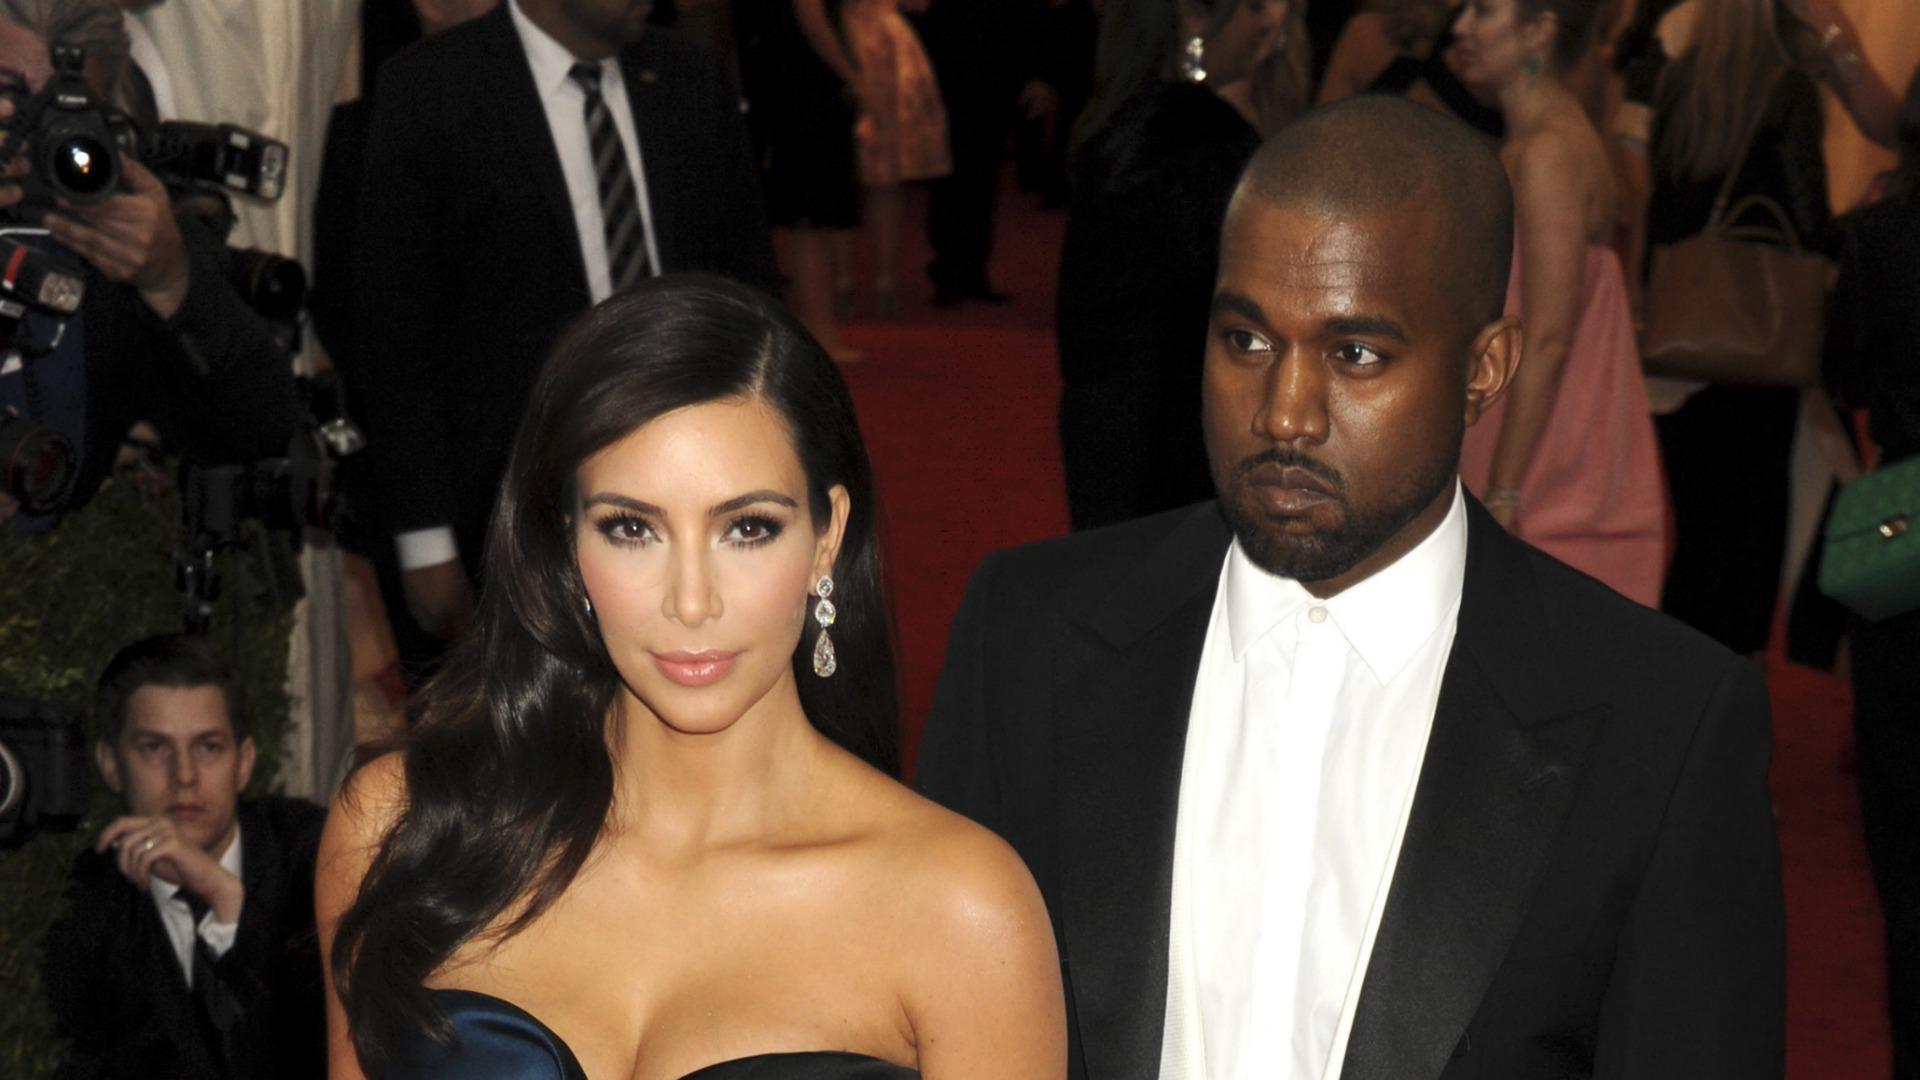 KUWTK: Kim Kardashian Files For Divorce From Kanye West While Already Living Separate Lives – Details!